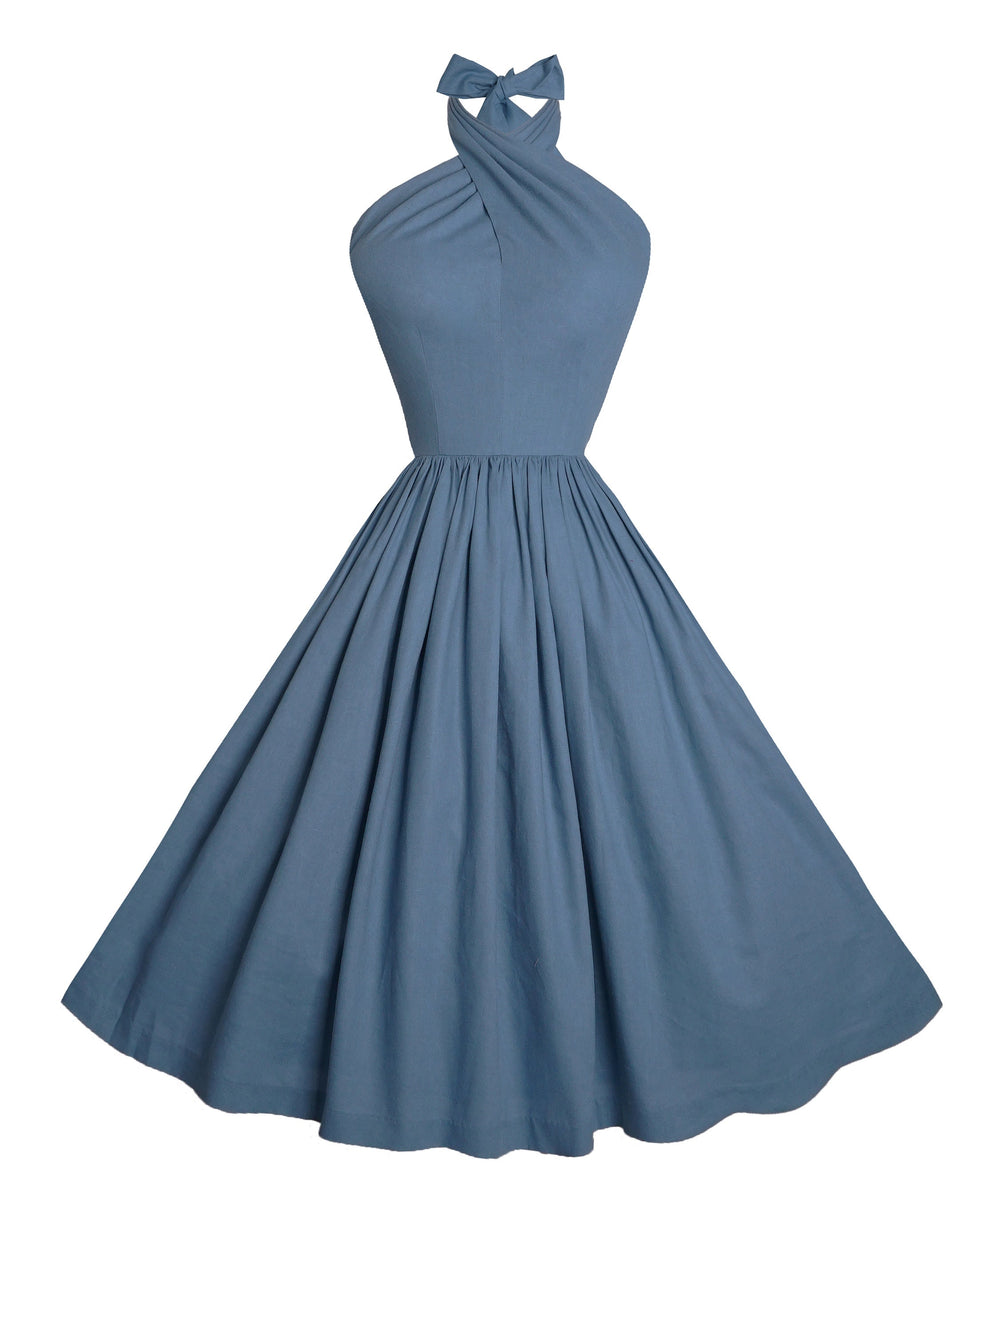 Choose a fabric: Ethel Dress